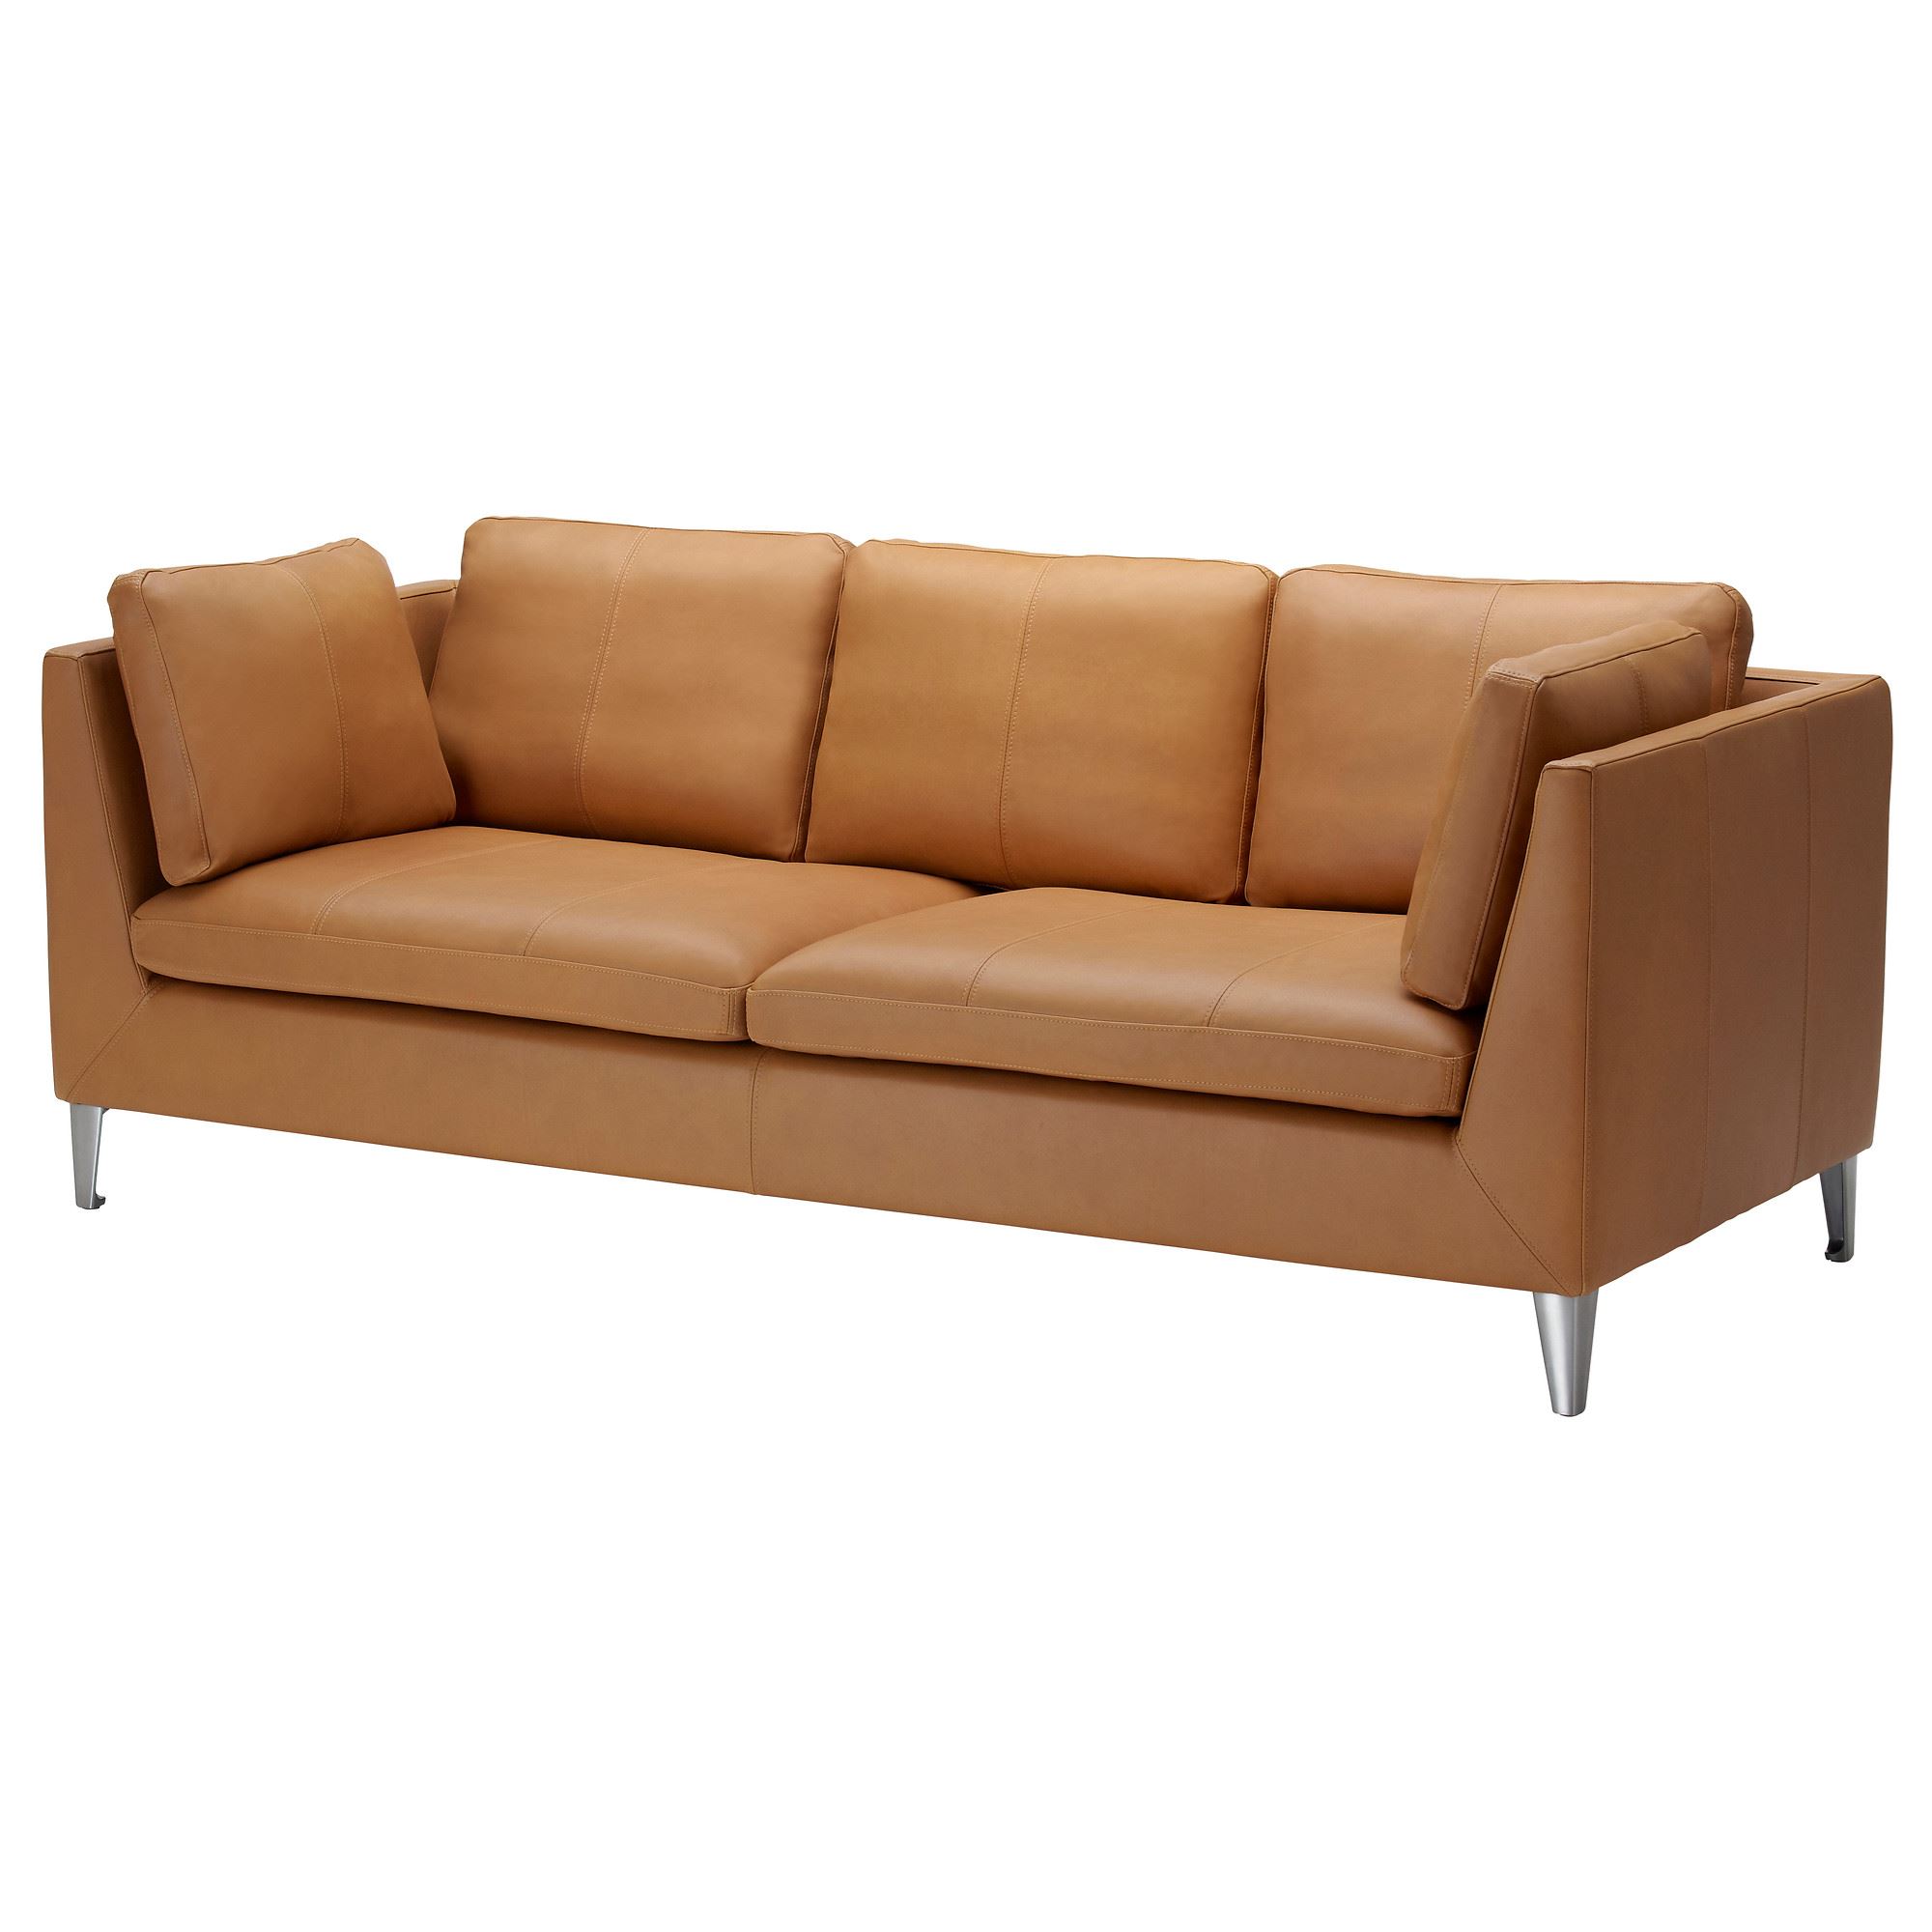 STOCKHOLM, 3seat leather sofa, seglora natural